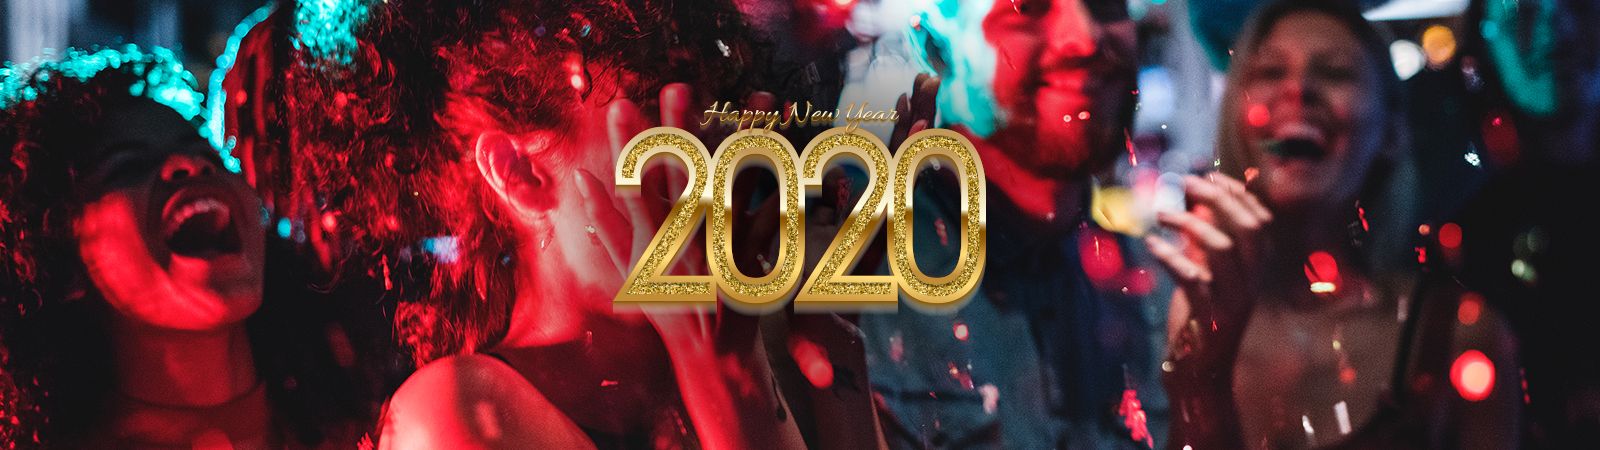 grey eagle casino new years eve 2020